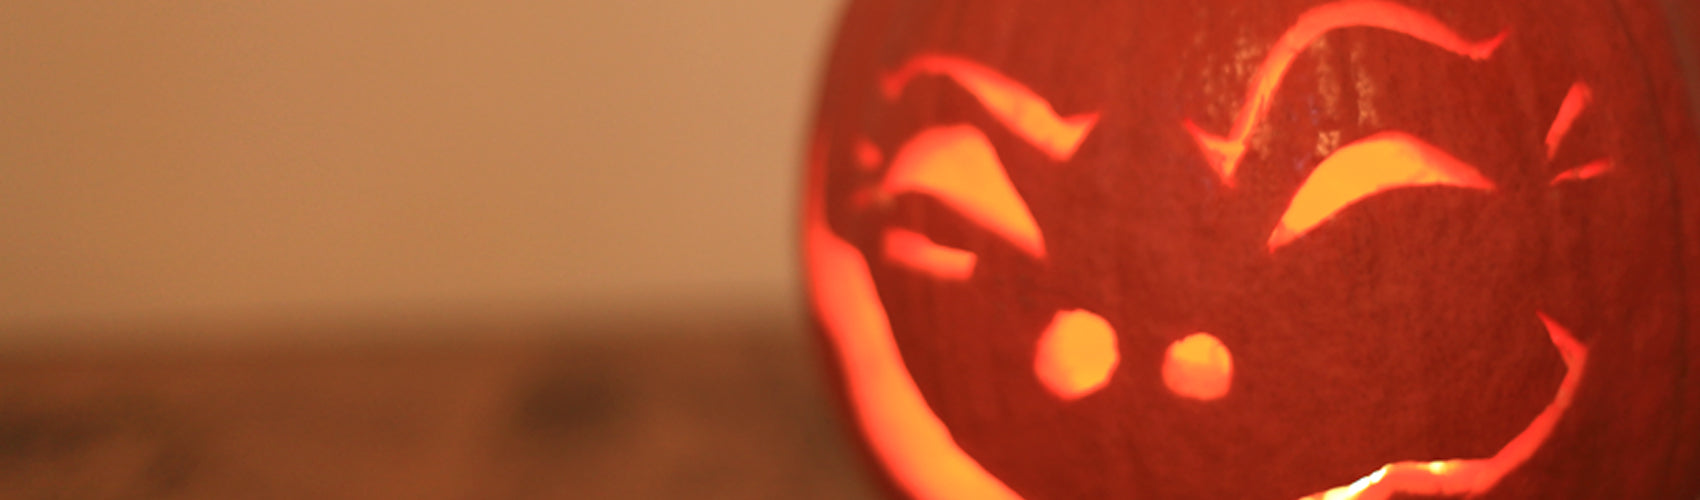 Pumpkin Carving Blog post Header 01